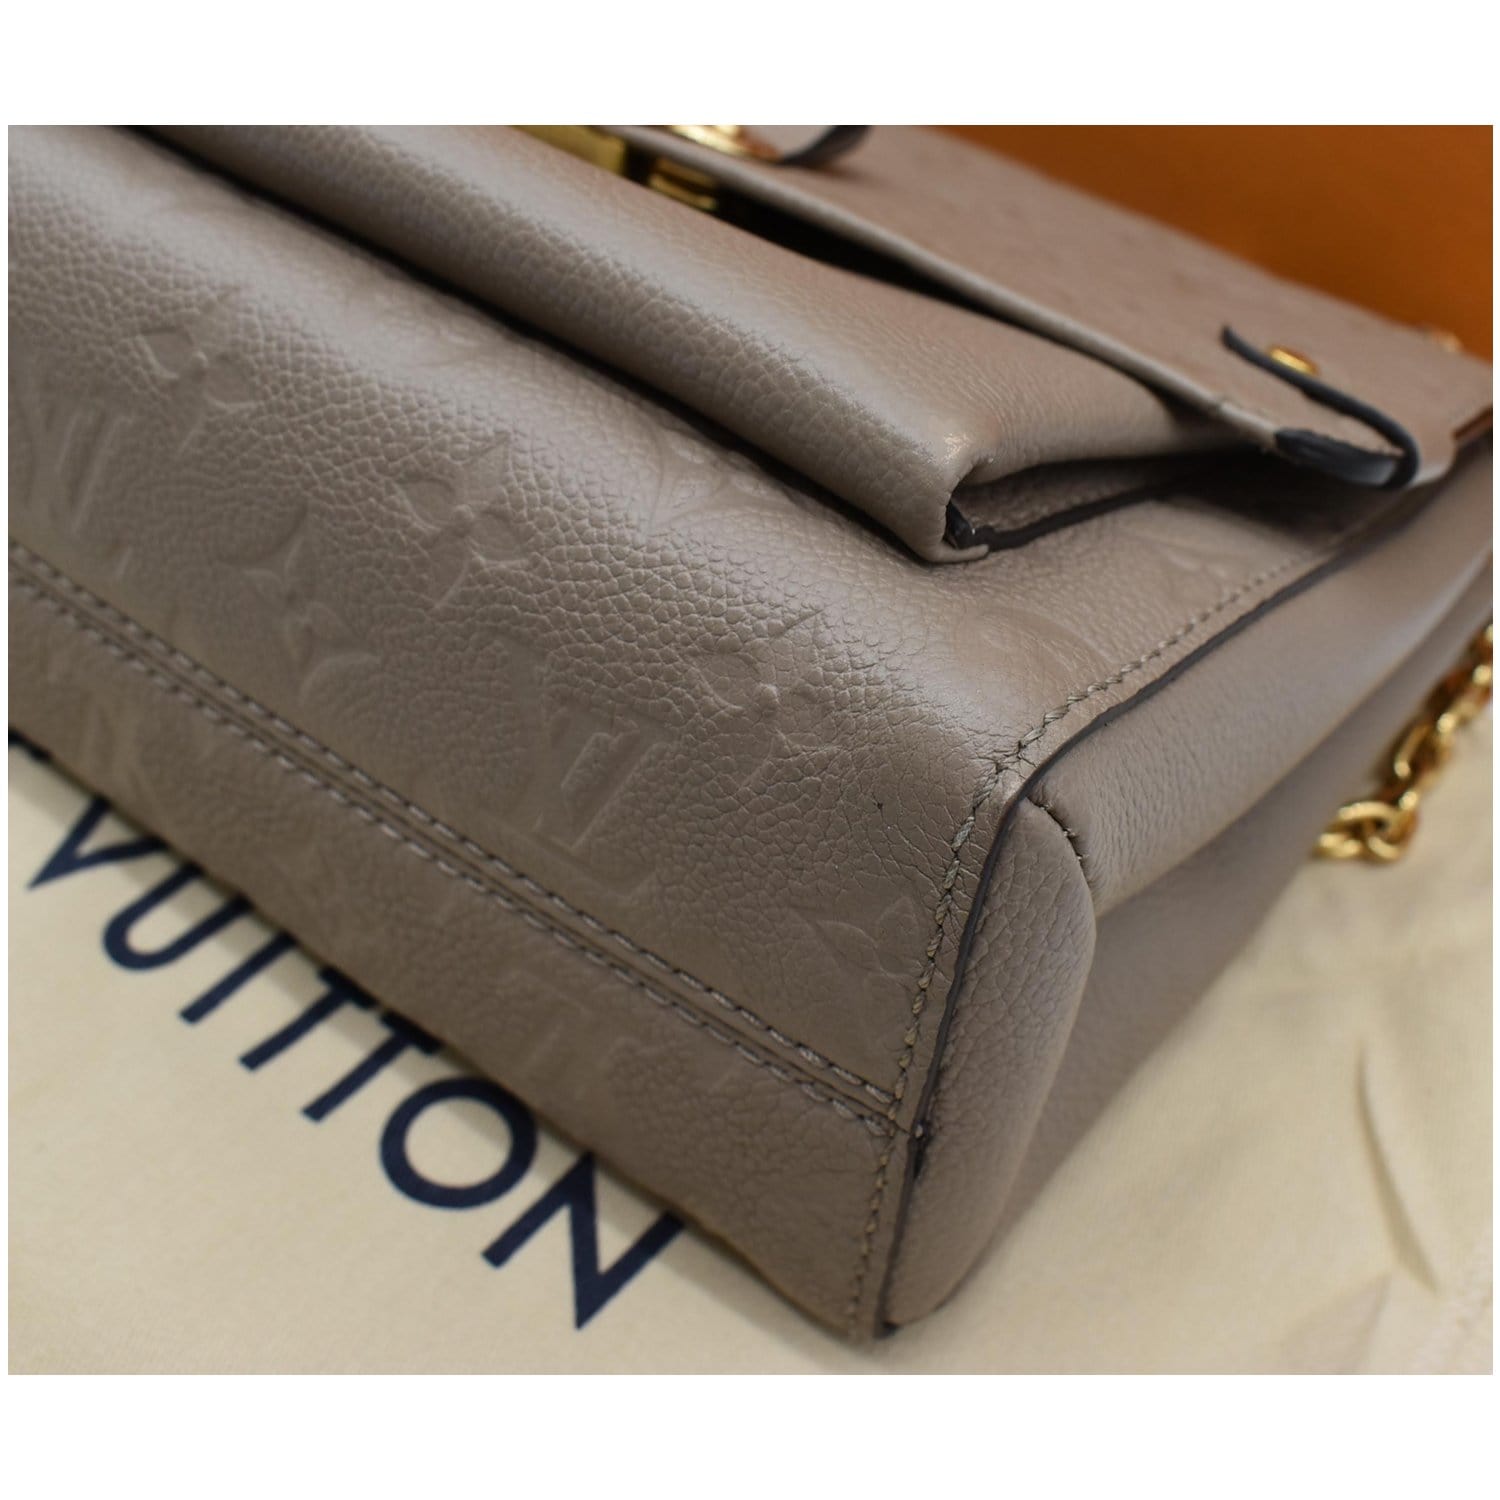 New Louis Vuitton vavin pm turtle dove handbag